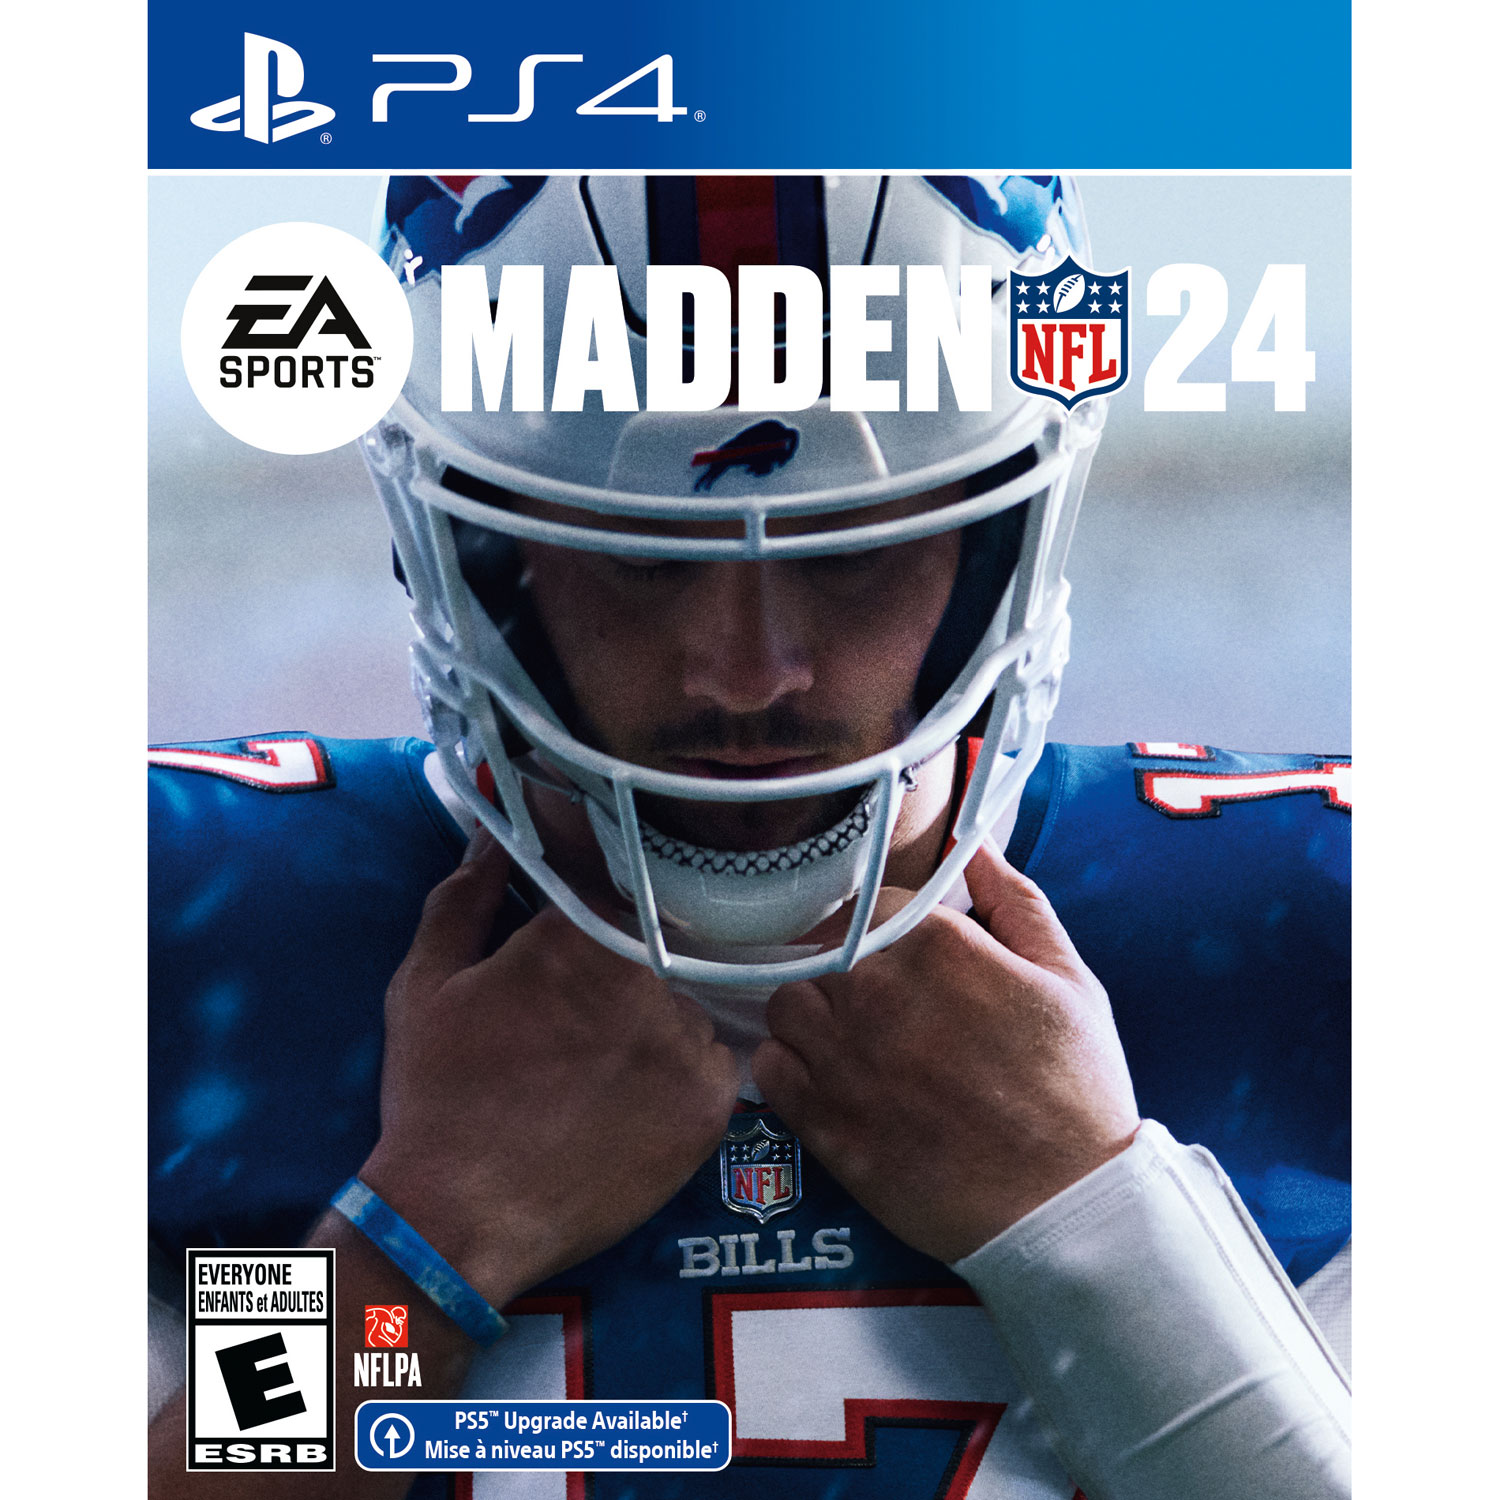 Madden NFL 24 (PS4)